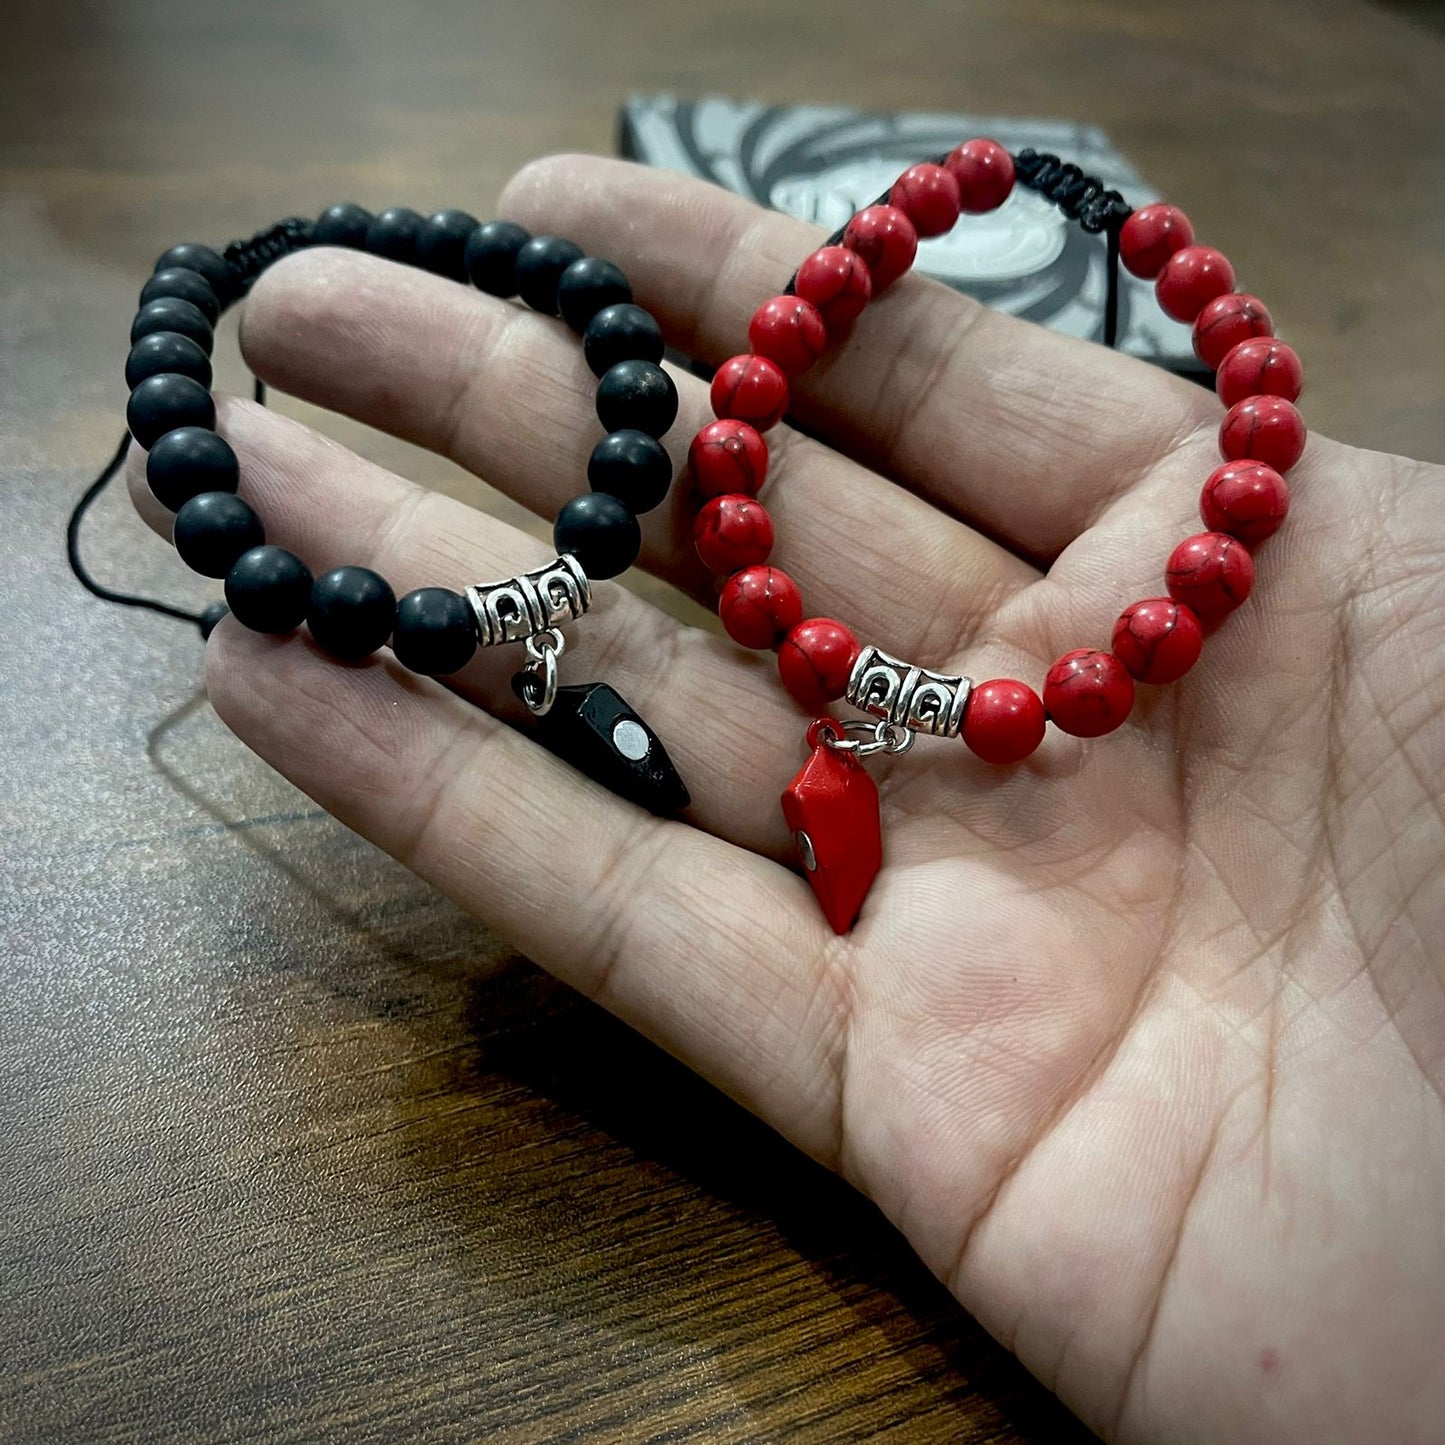 Red & Black Beads Heart Magnetic Distance Bracelet Set Couple Bracelet